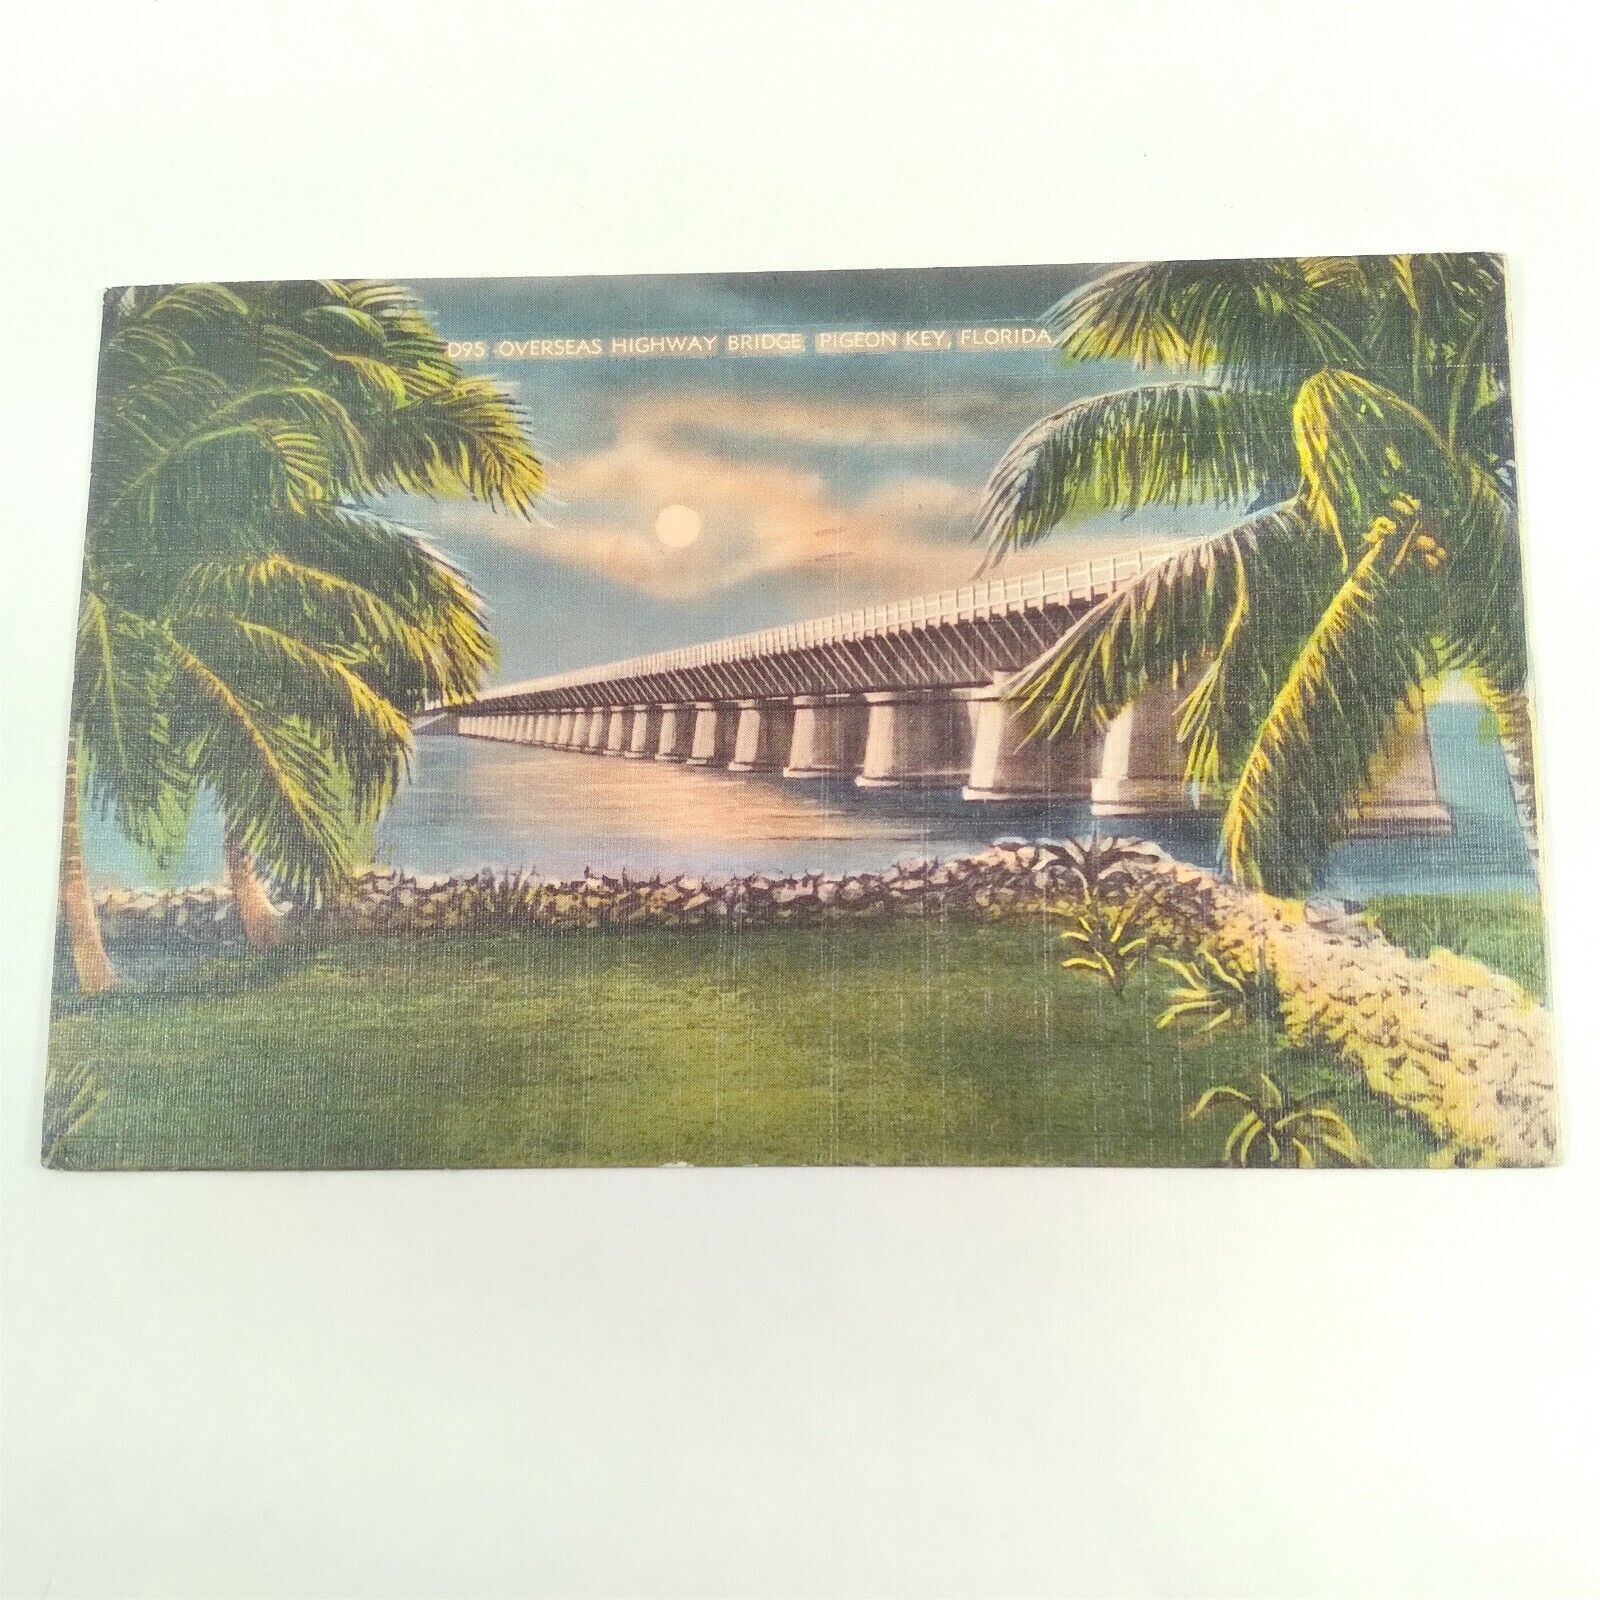 Pigeon Key Florida -Overseas Highway Bridge- Moonlit Postcard Posted 1946